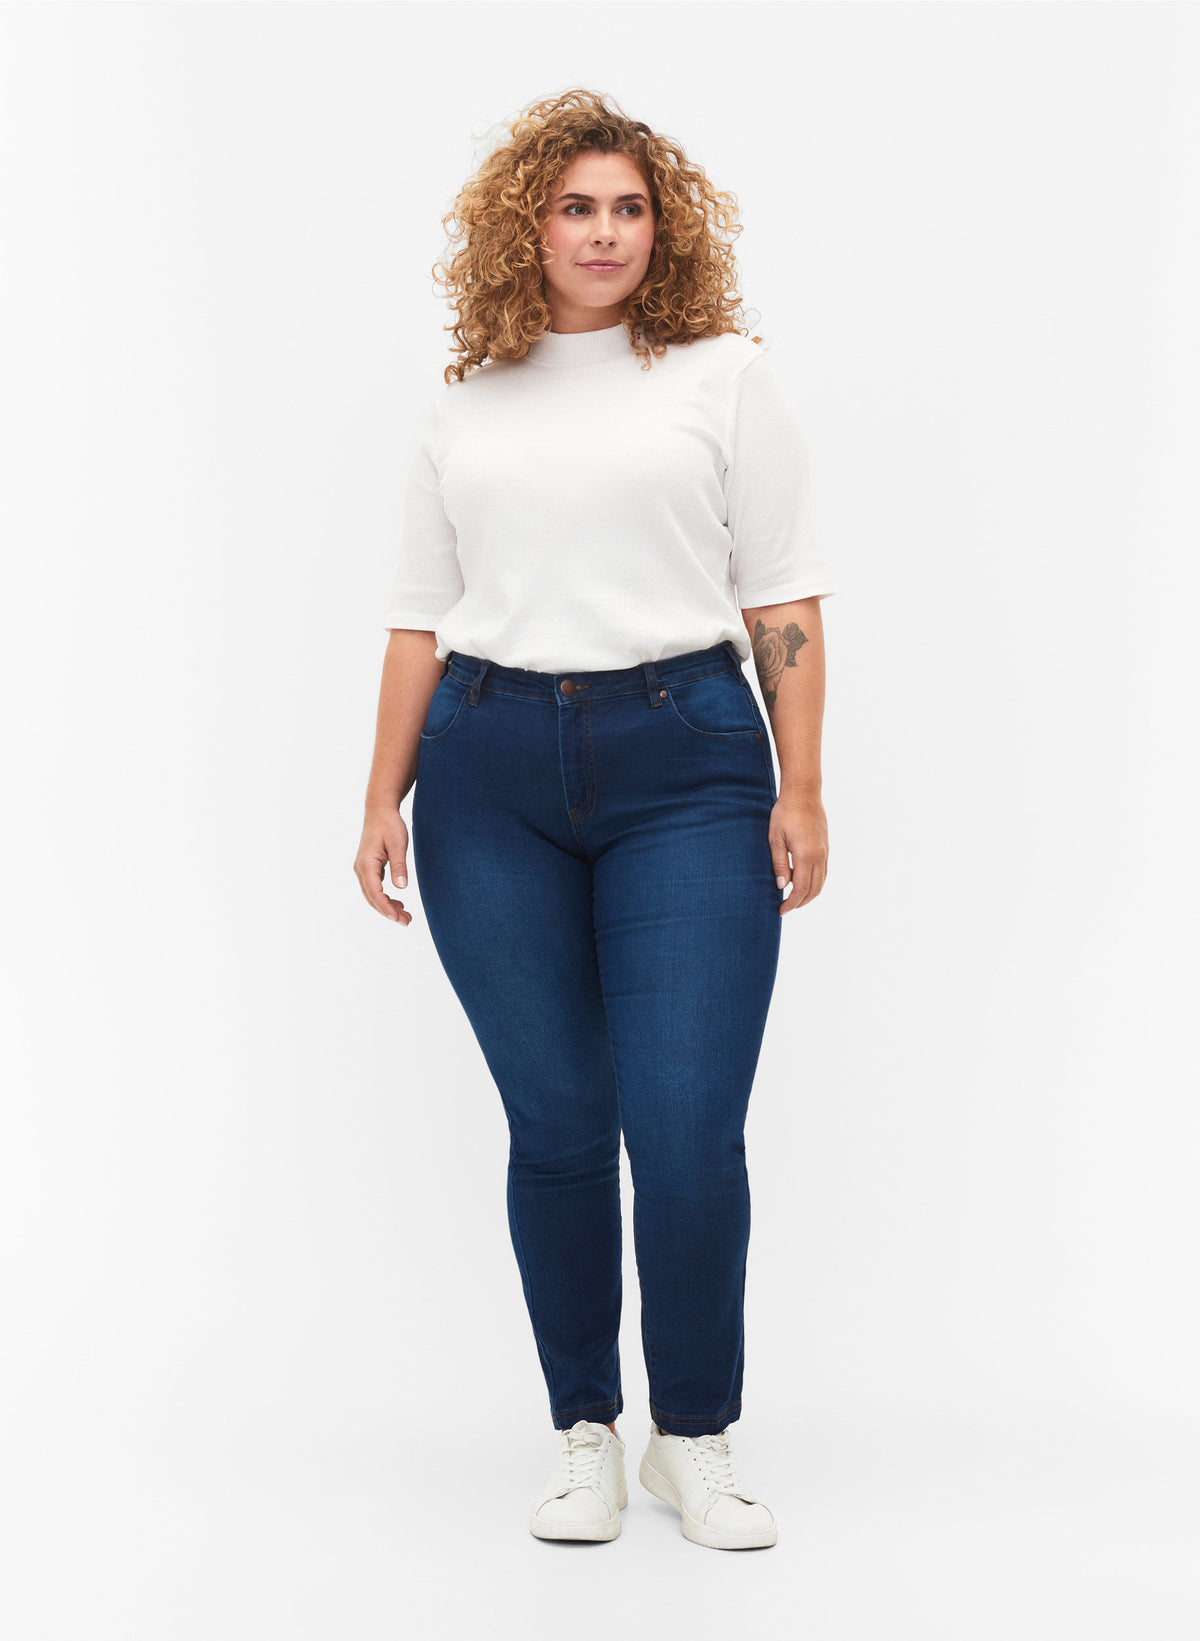 Jeans Size Plus Ireland WardrobePlus Women\'s |